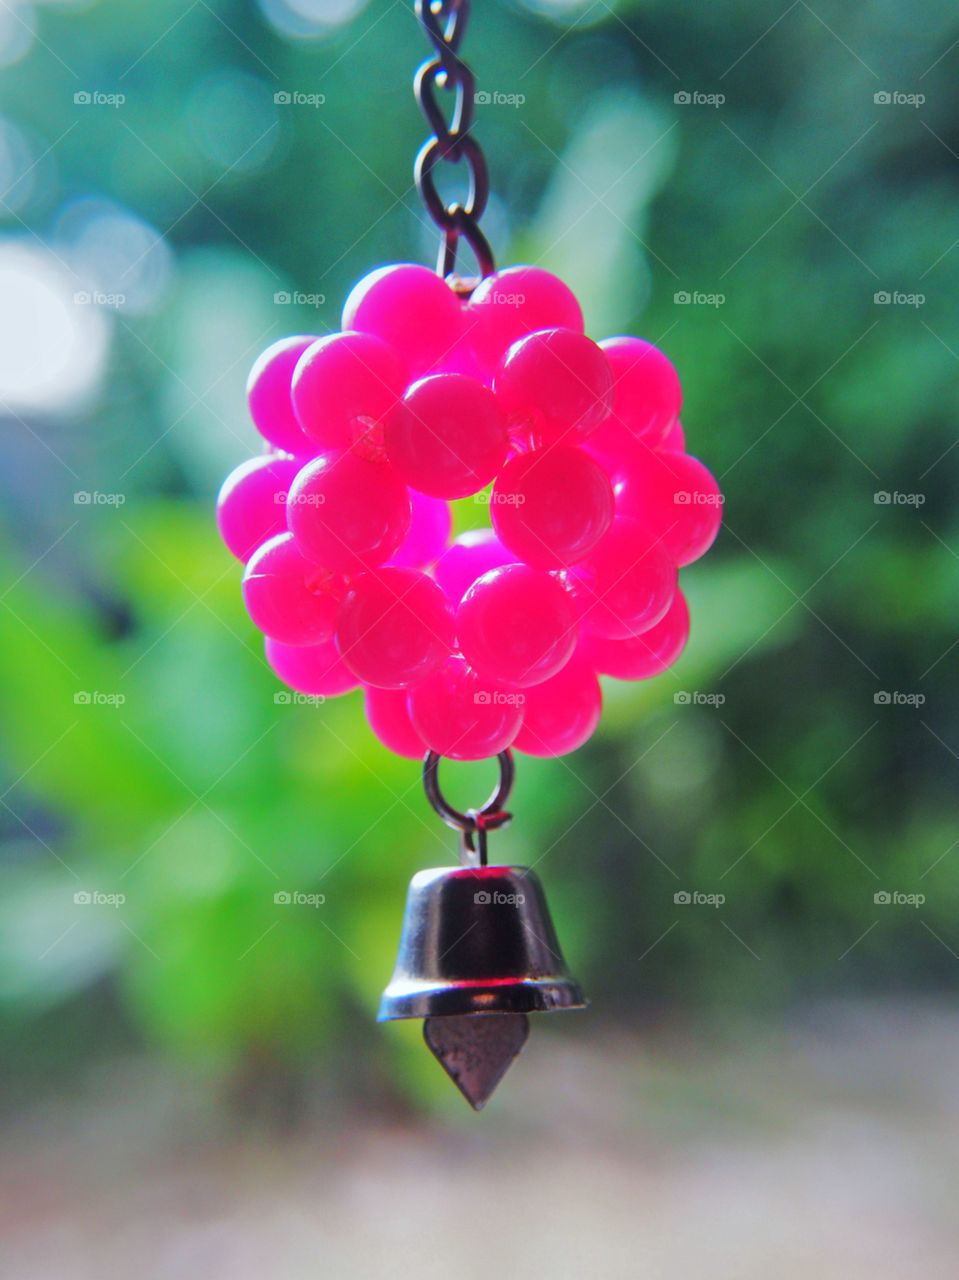 Pink key chain green blur background